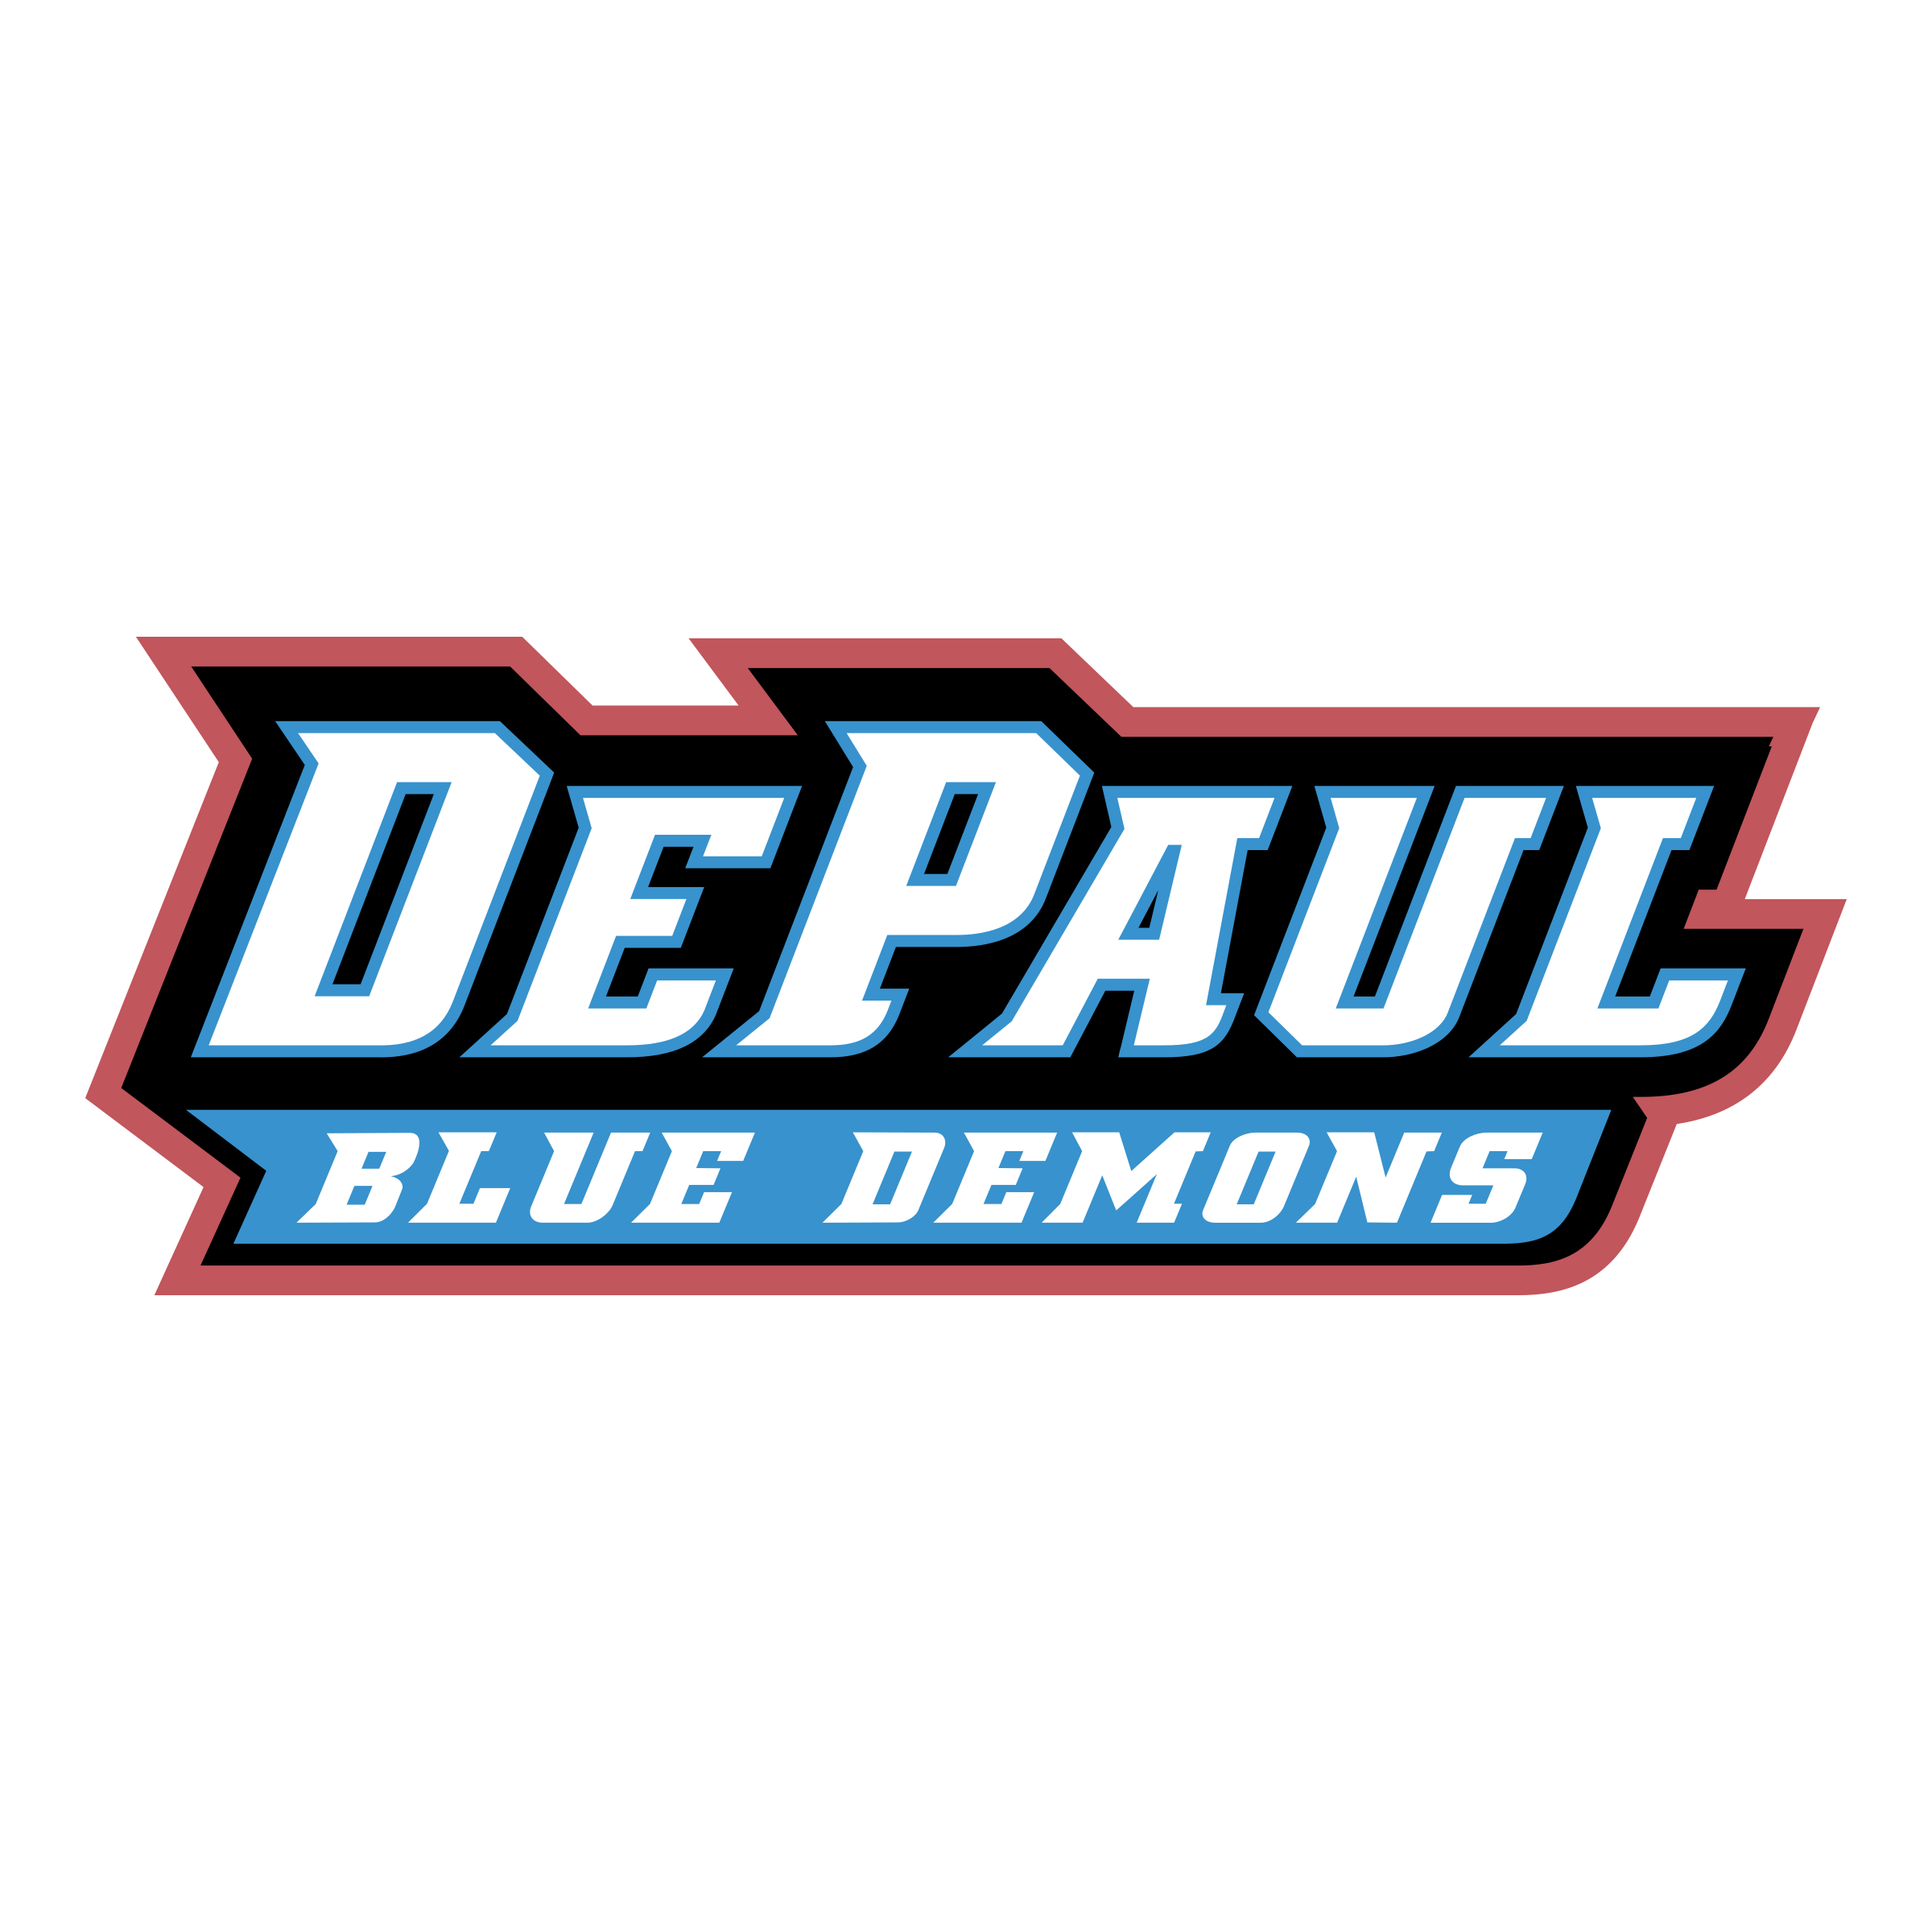 DePaul Logo - DePaul Blue Demons Logo PNG Transparent & SVG Vector - Freebie Supply